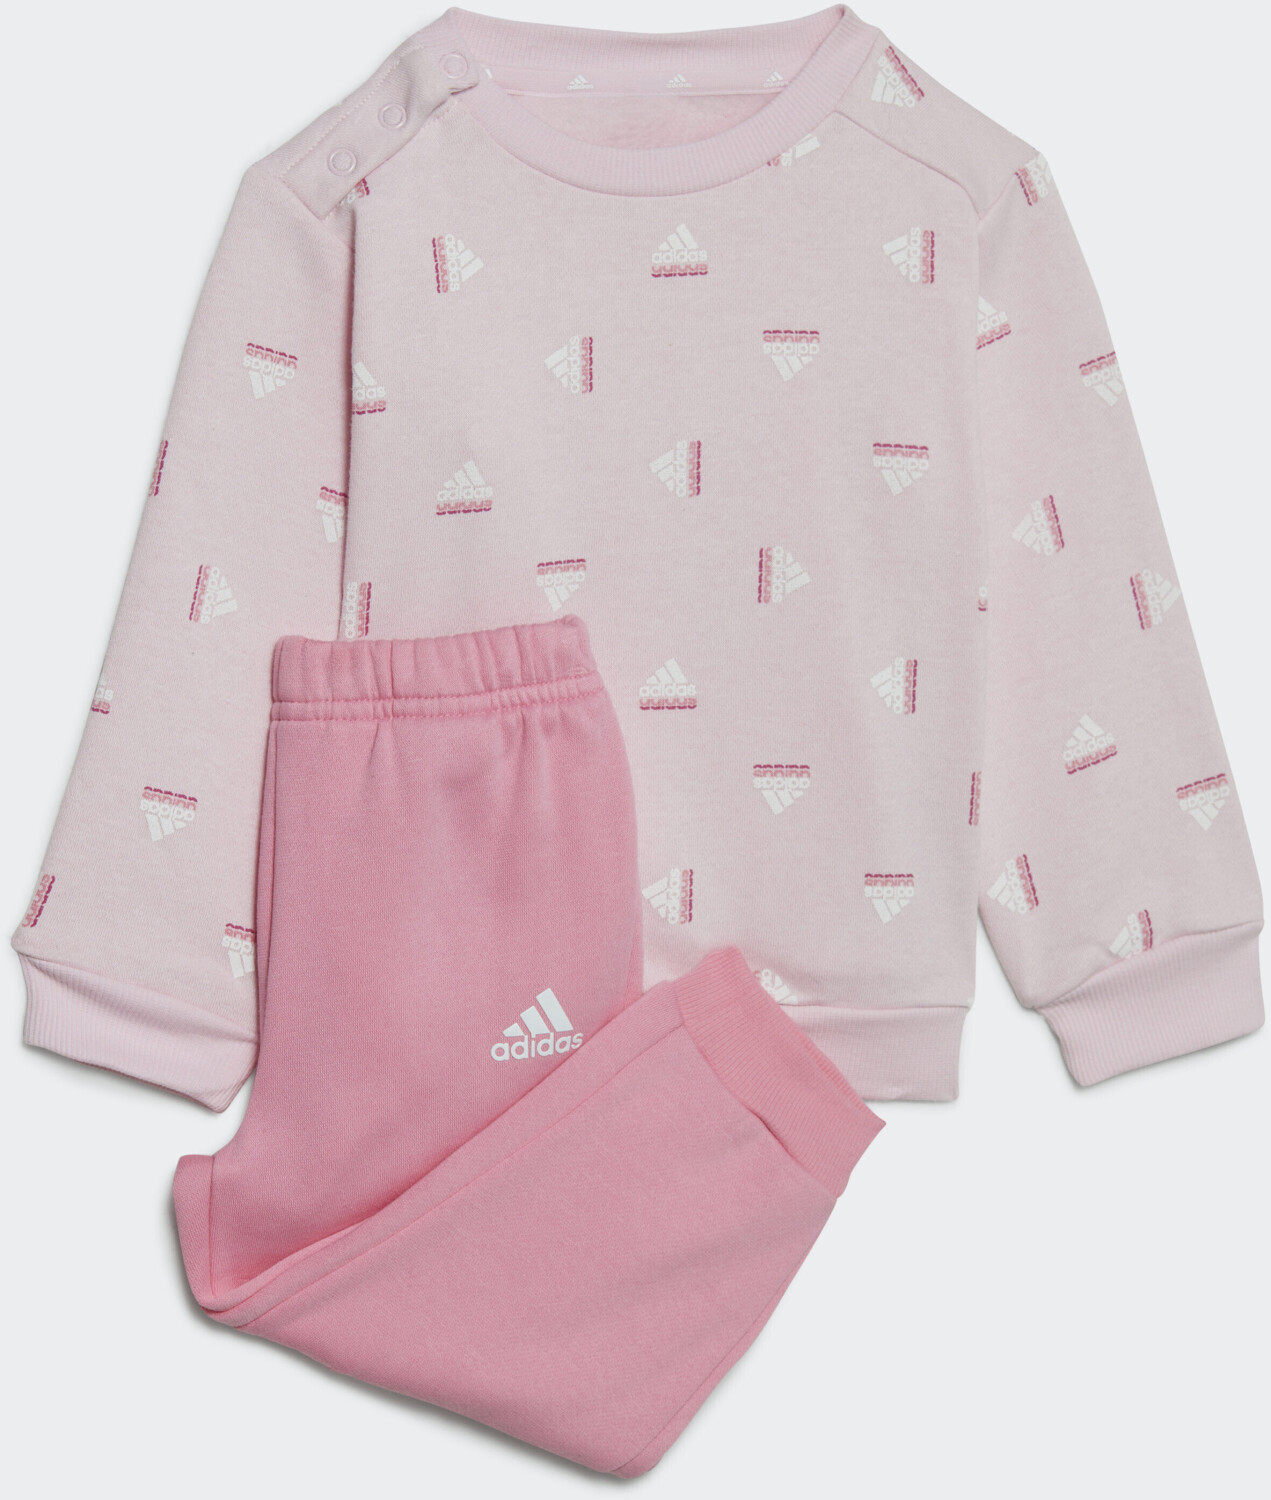 Adidas Kids Brand Love Fleece € pink/white Jogginganzug ab 30,19 bei (IC0452) Preisvergleich Clear 